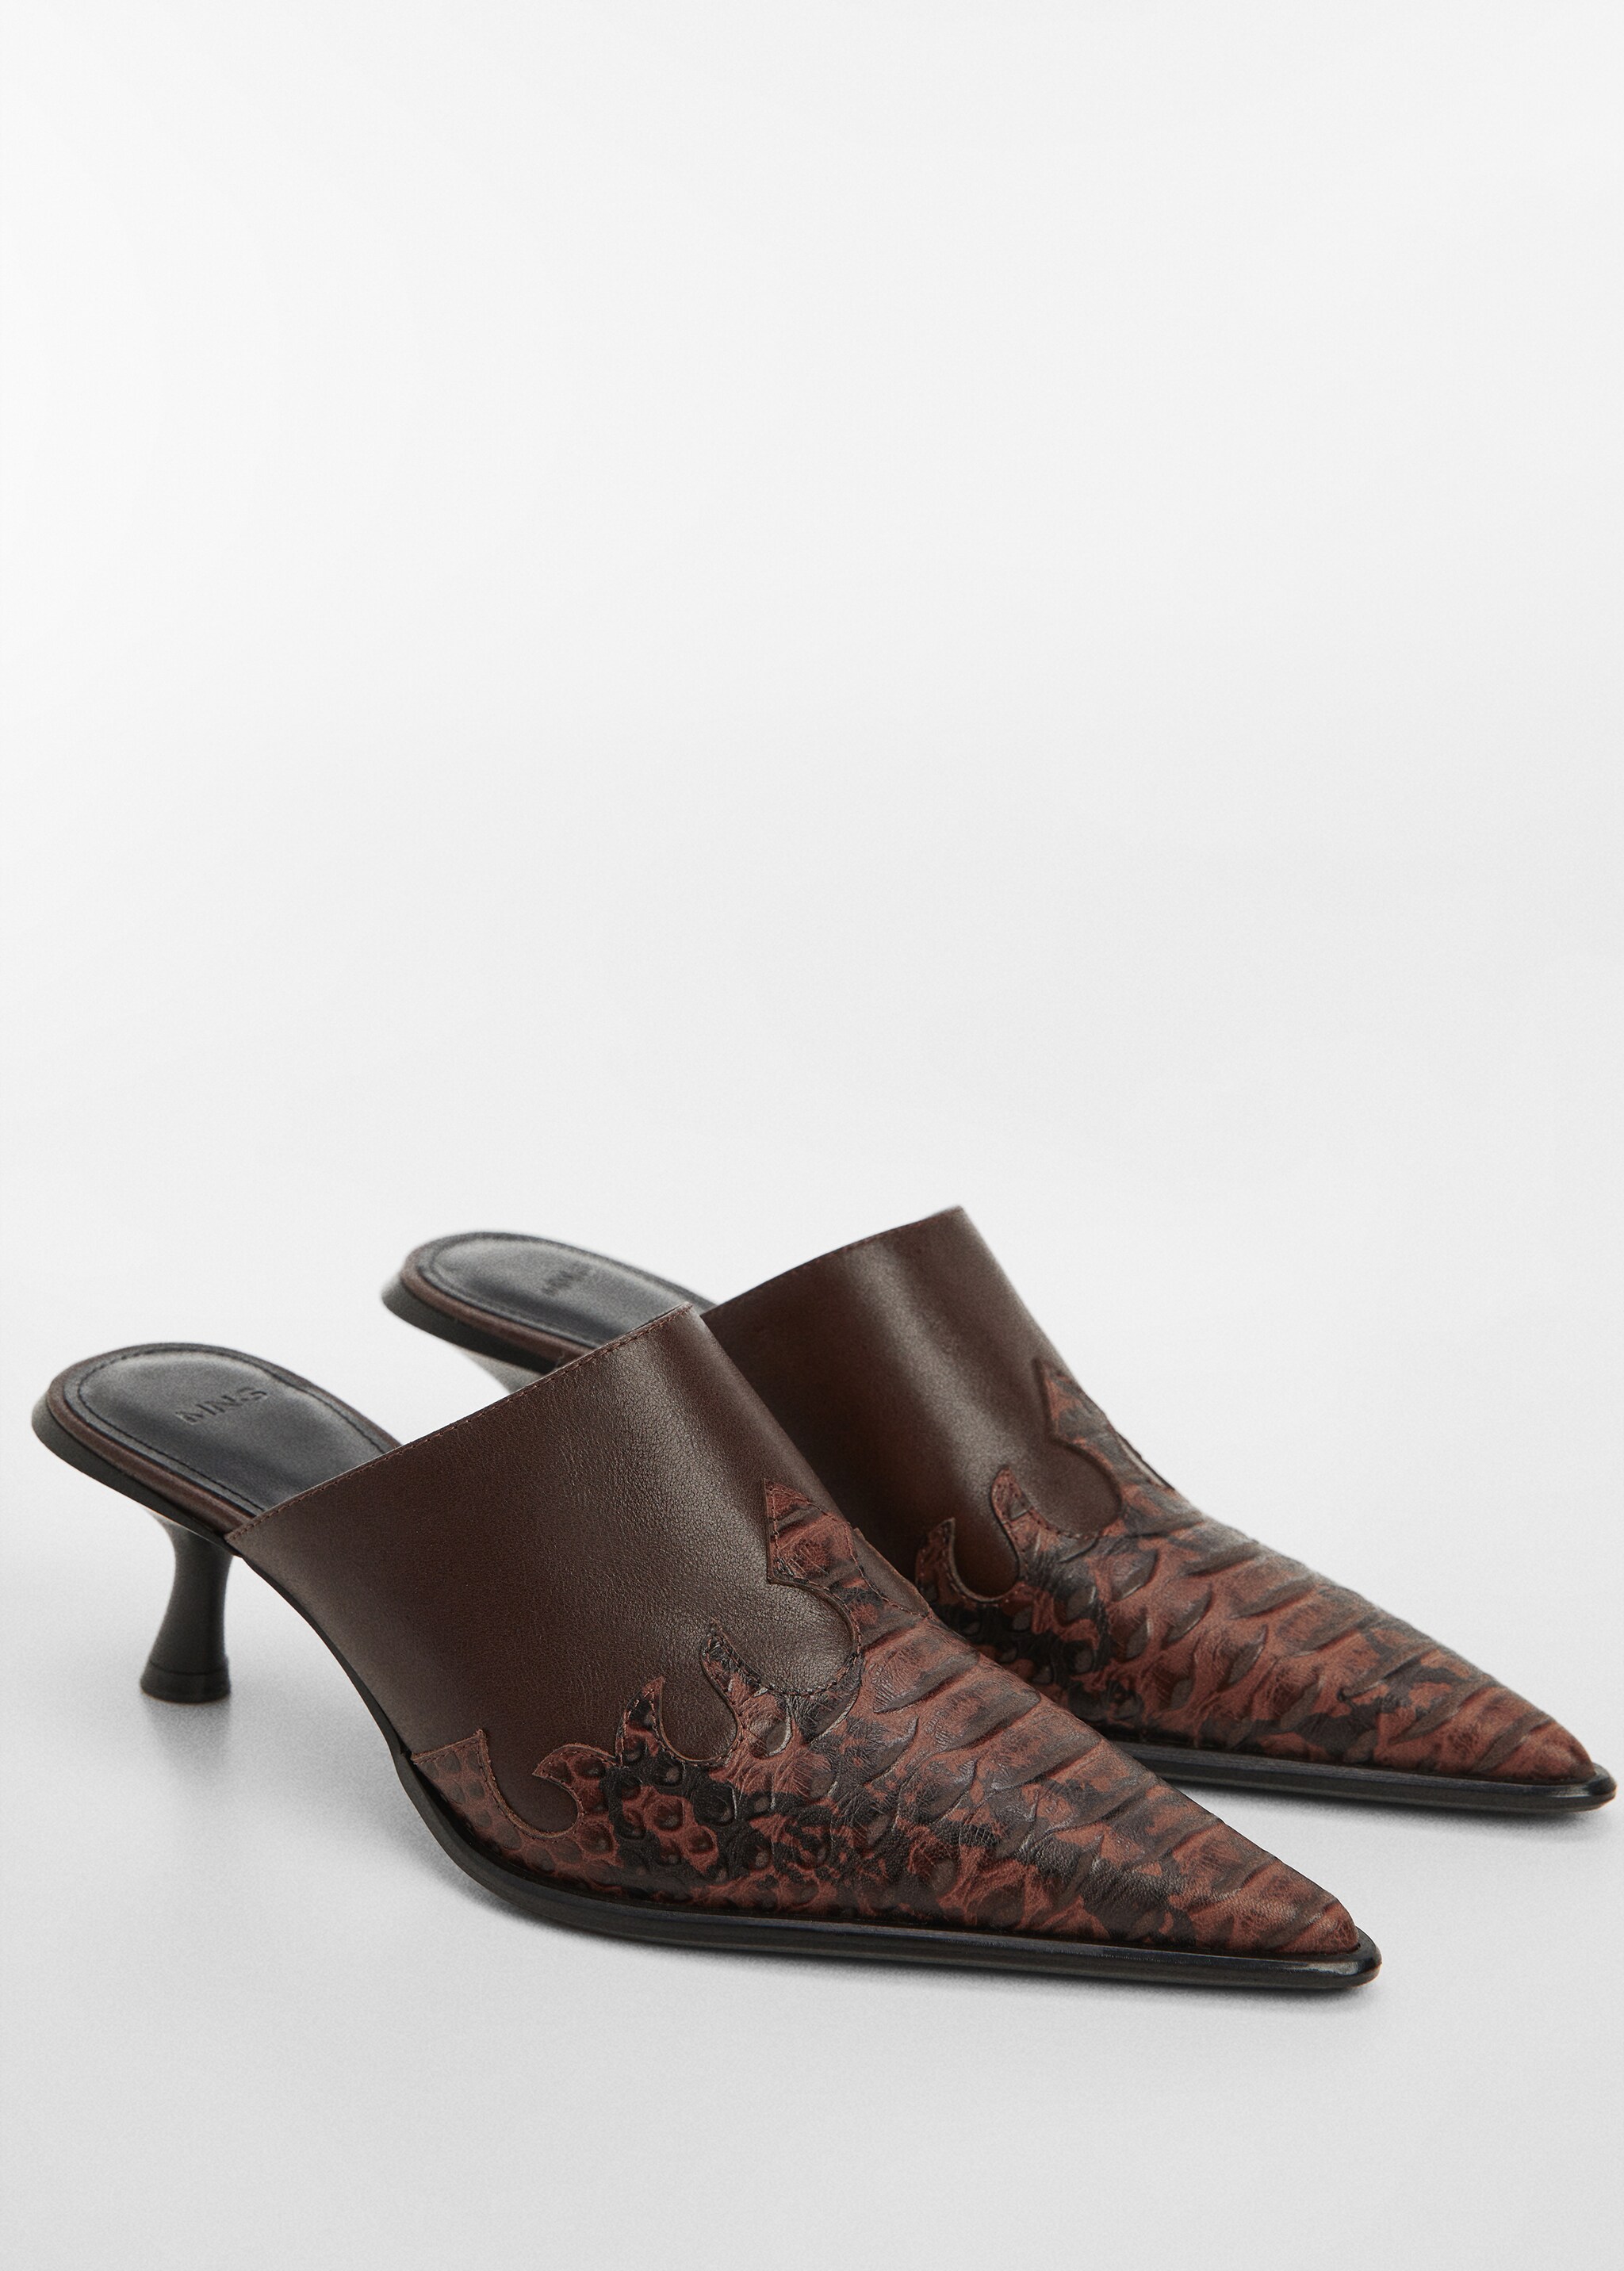 Coco-toe leather shoe - Medium plane